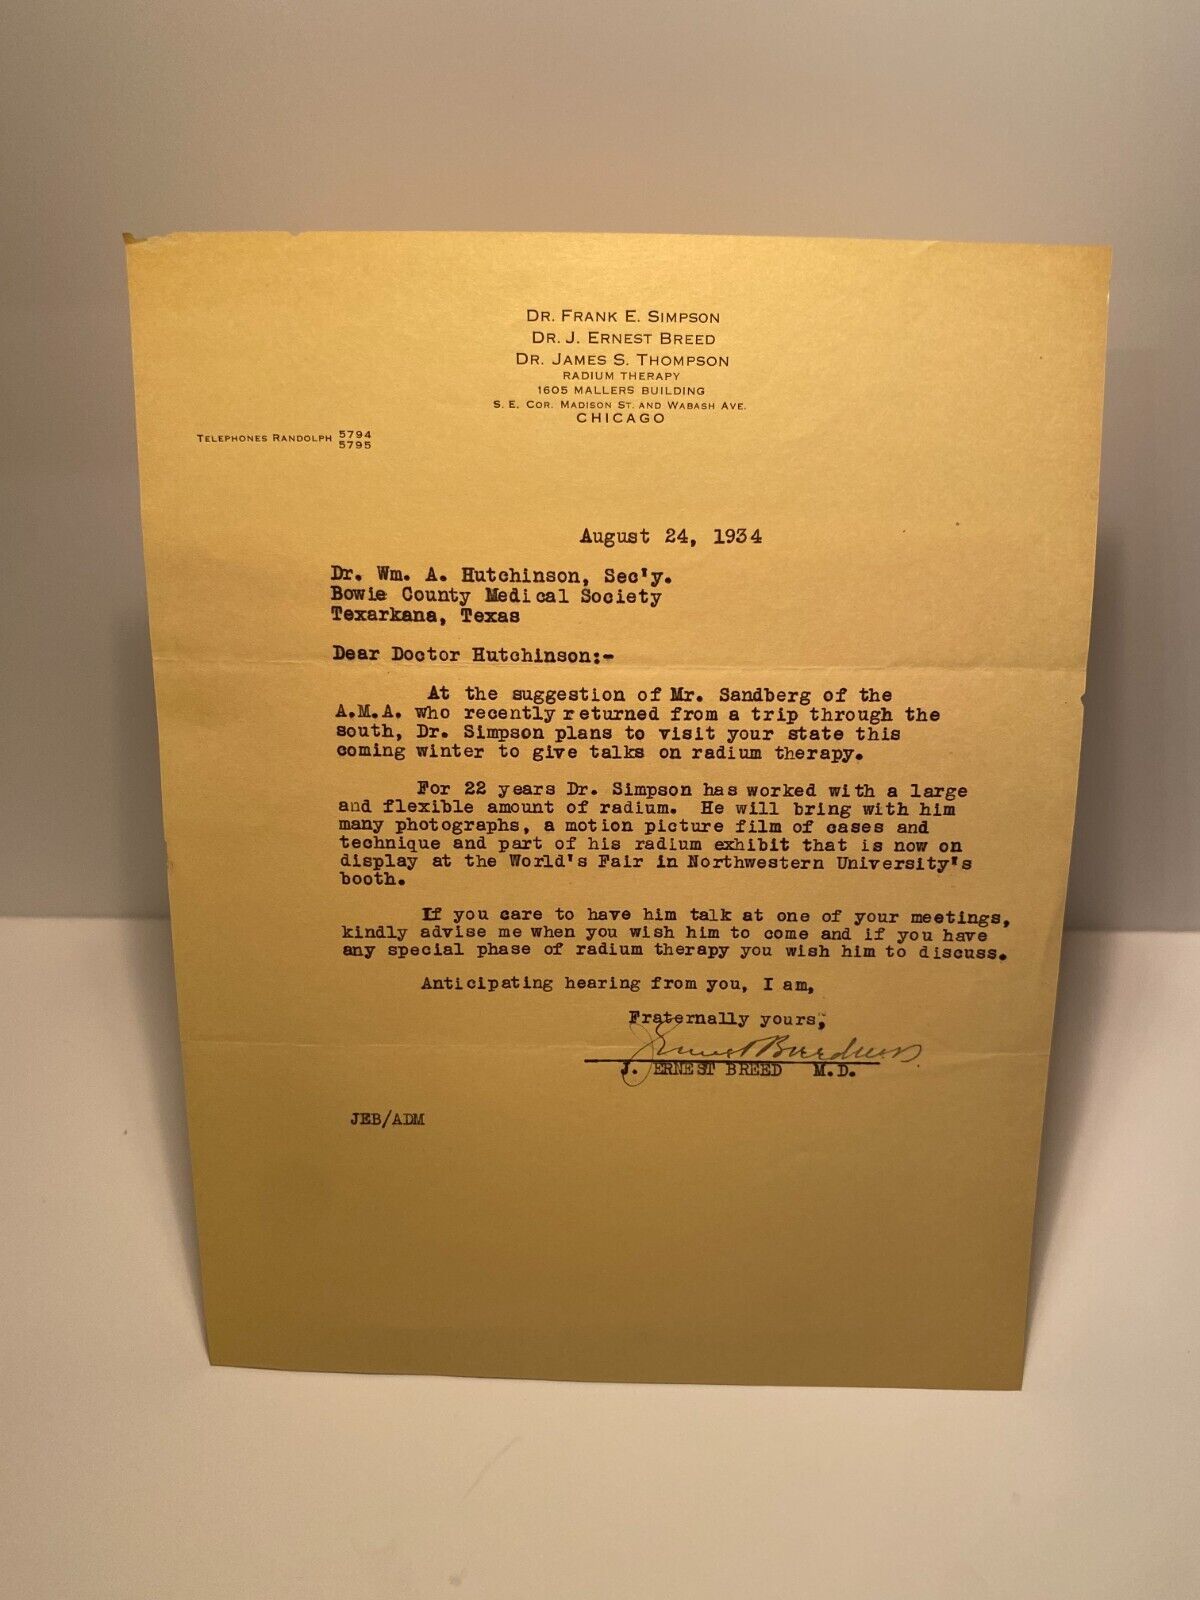 Dr. J. Ernest Breed 1934 Letter Radium Therapy Radiation Treatment Texarkana Tx